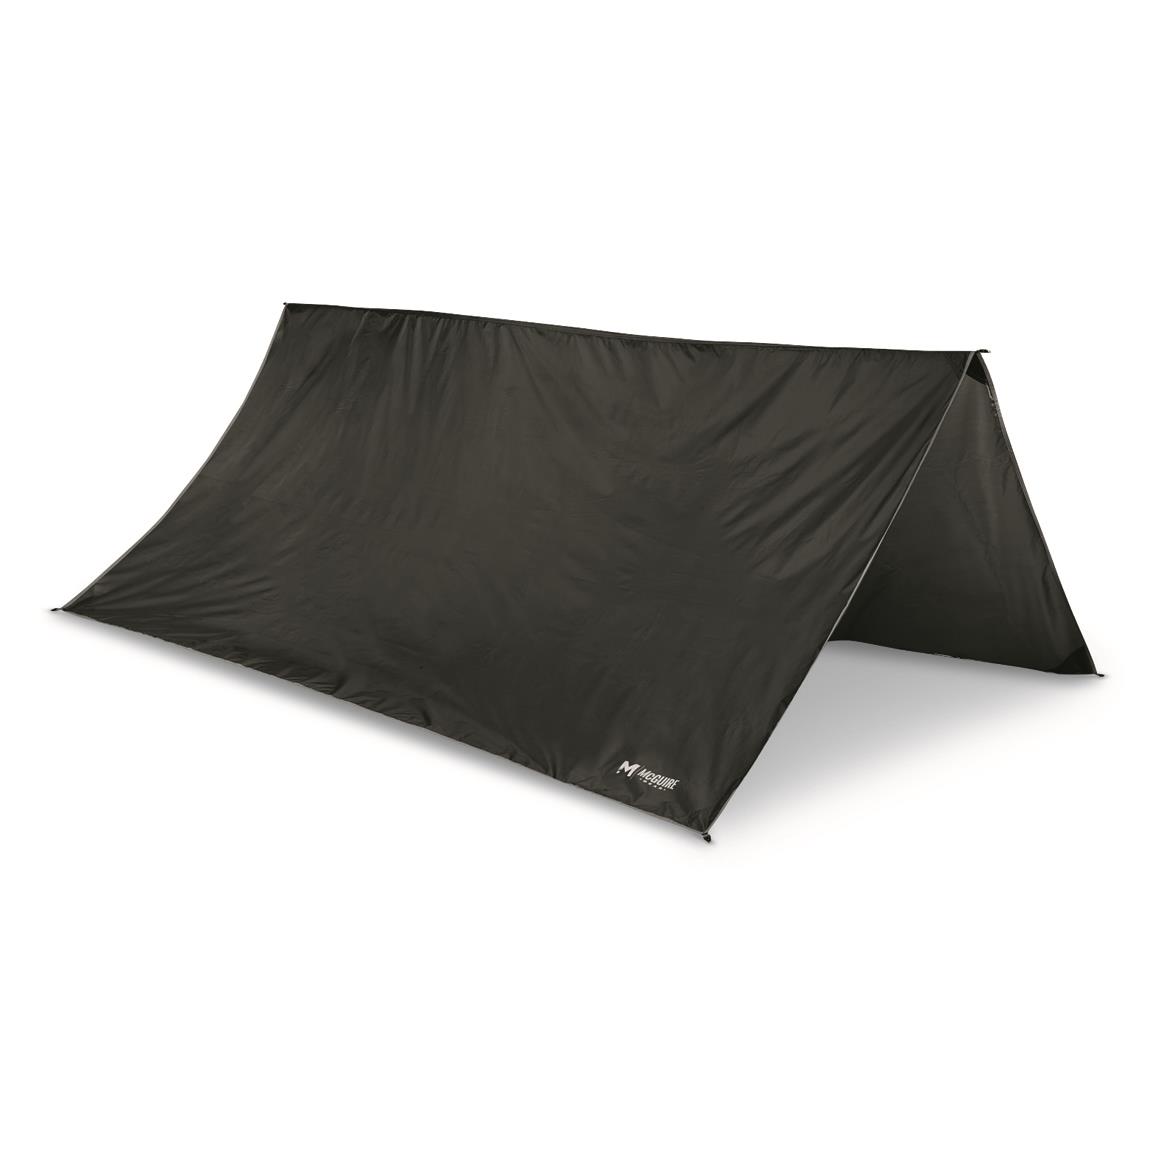 McGuire Gear Military Style Waterproof Tarp/Tent, Black